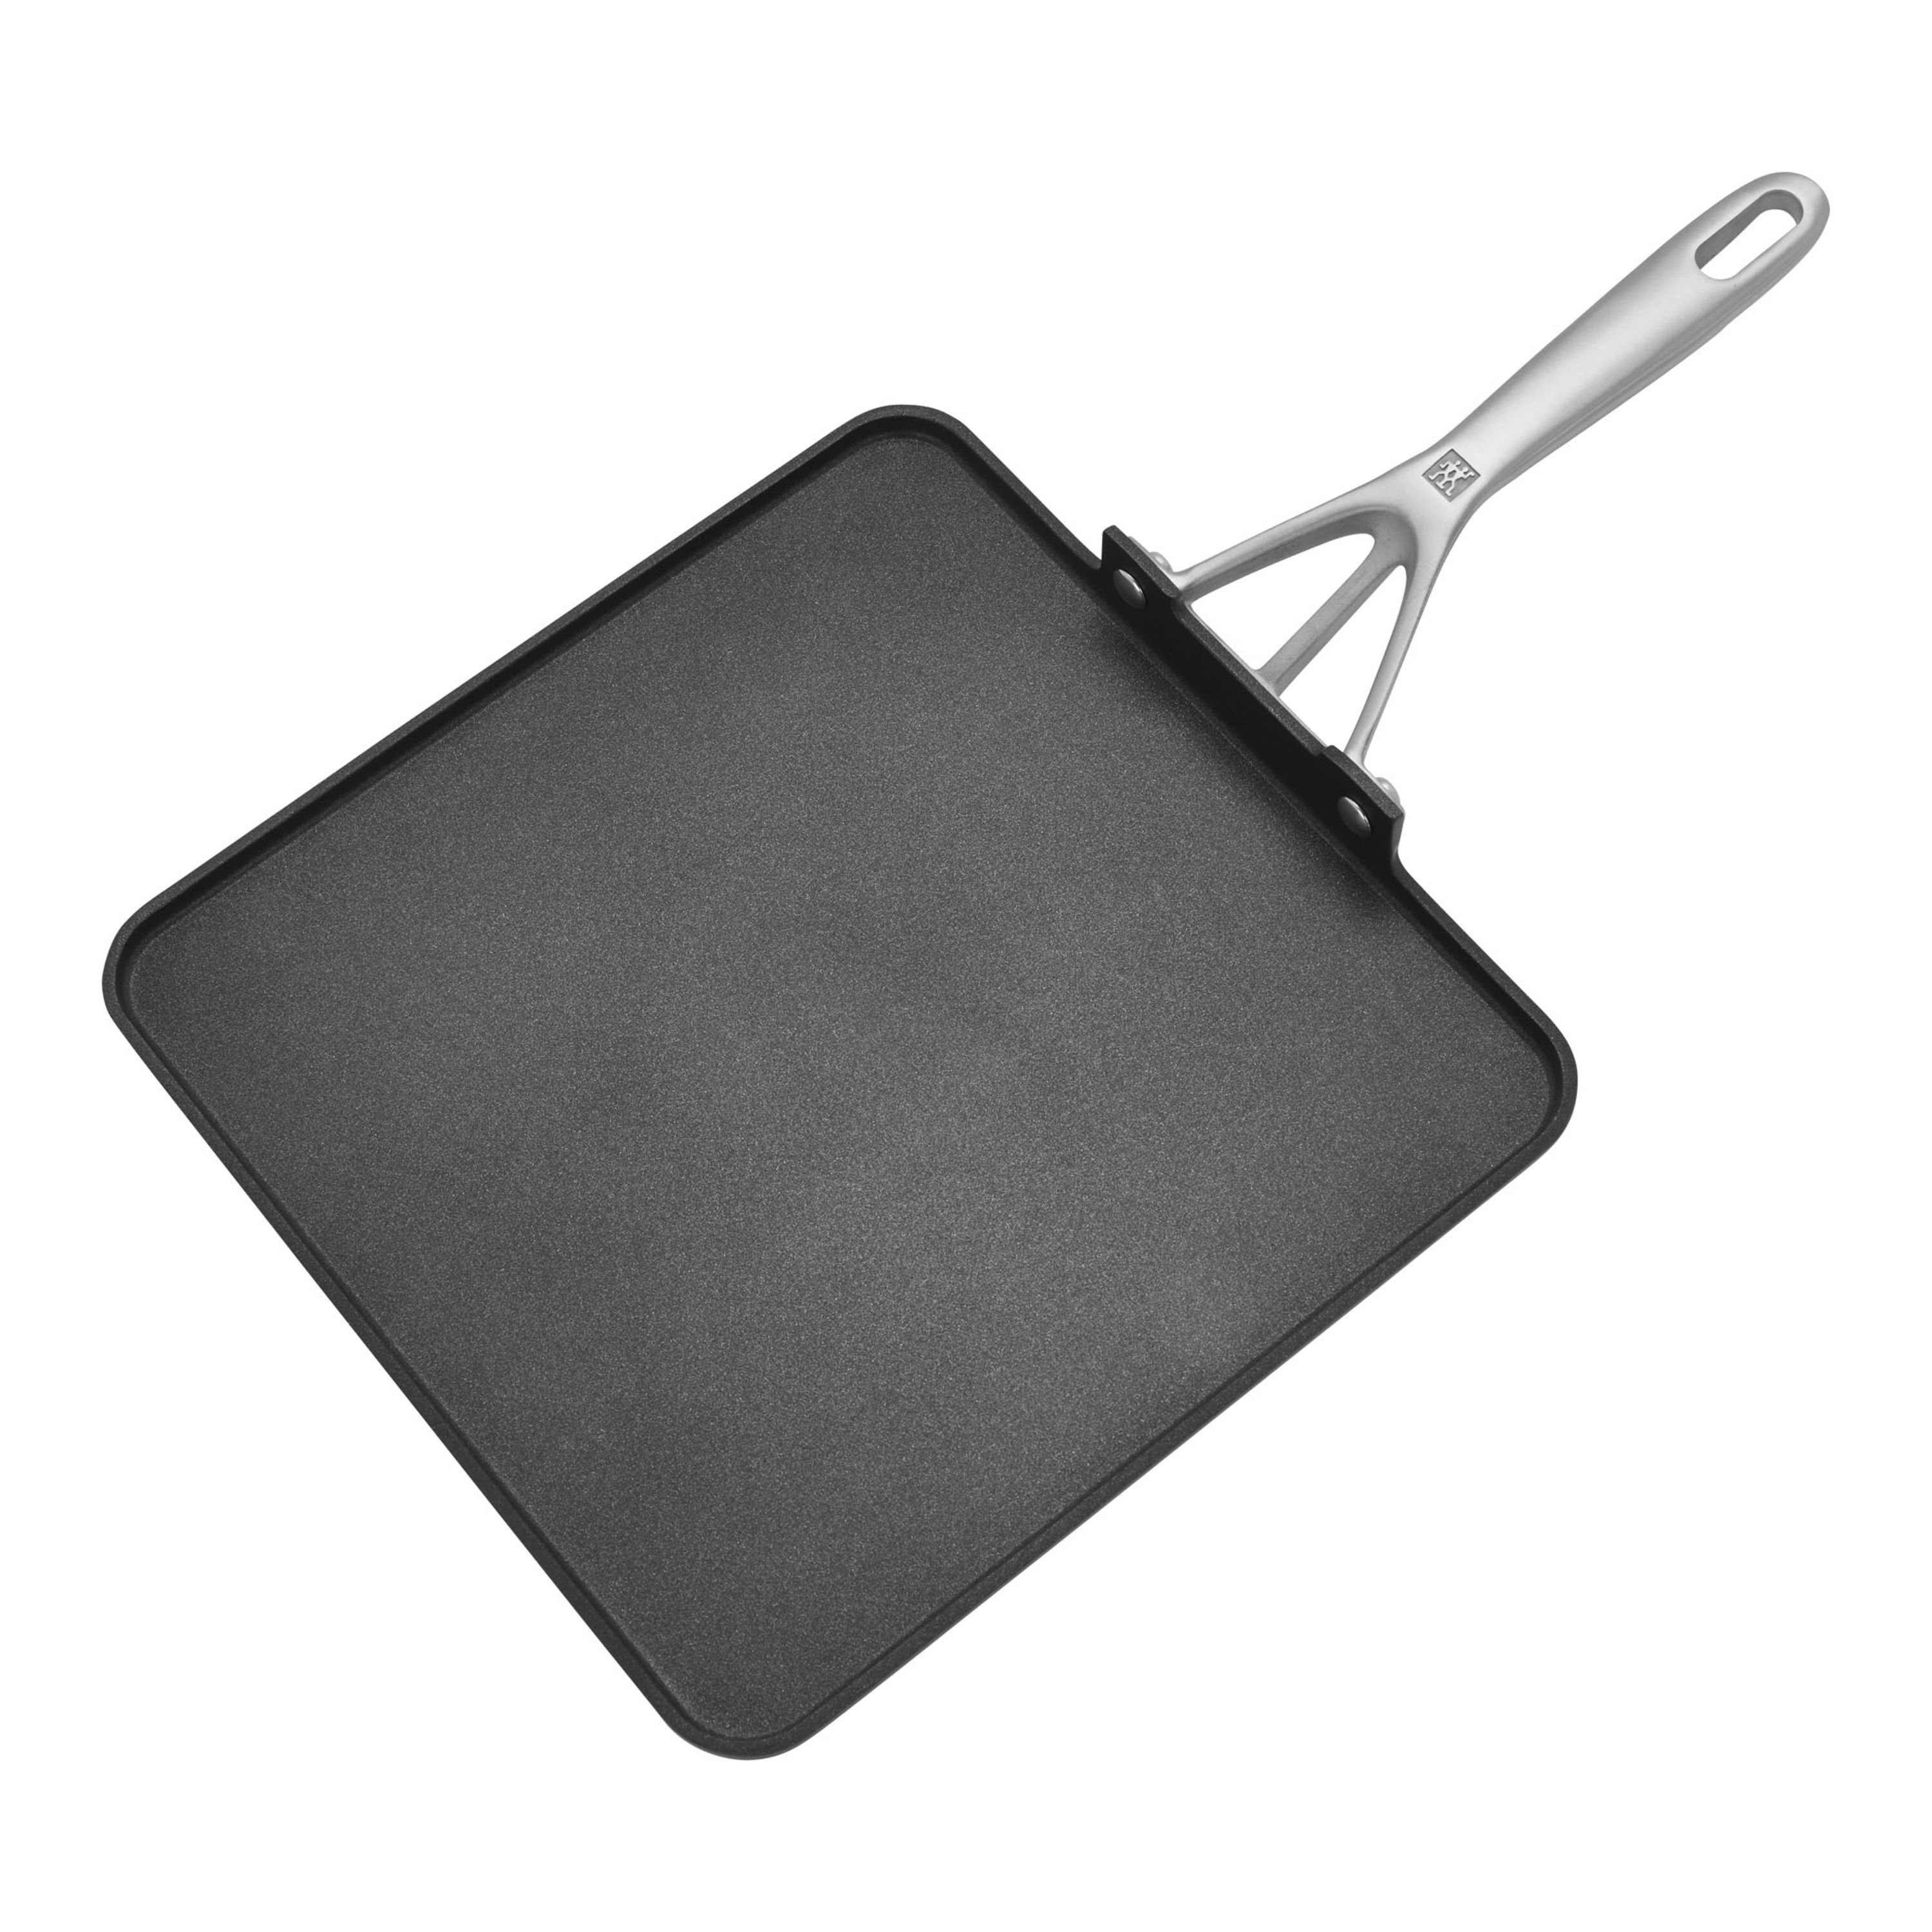  Calphalon Contemporary Hard-Anodized Aluminum Nonstick Cookware,  Square Grill Pan, 11-inch, Black: Home & Kitchen